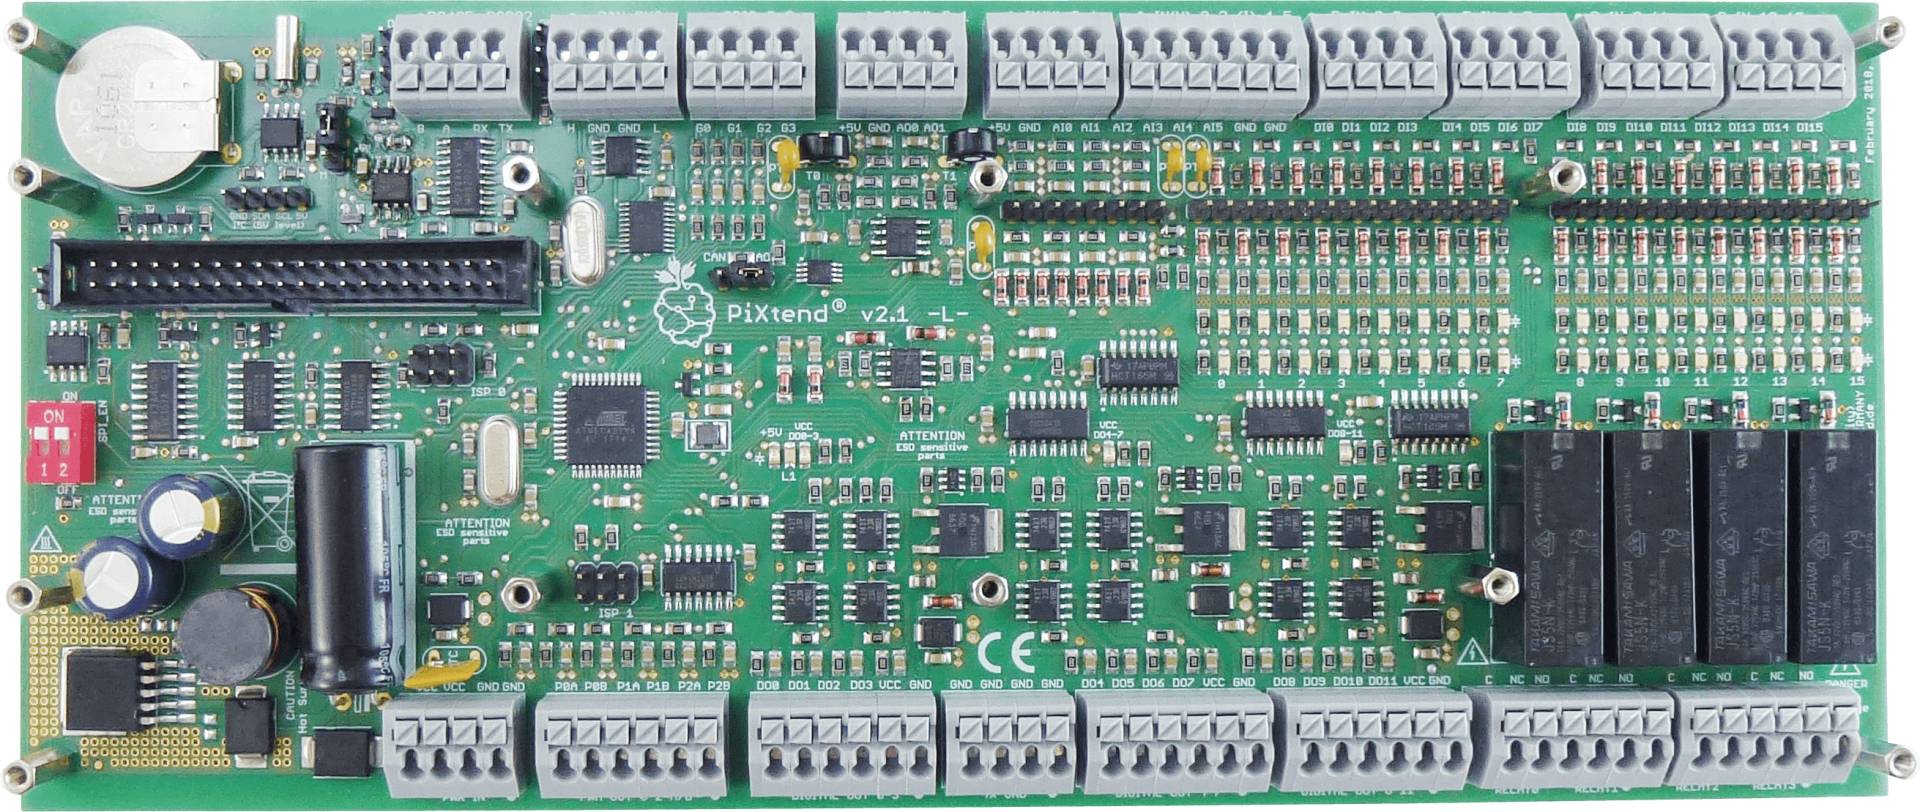 PIXTEND2 L BOARD - Raspberry Pi Shield - SPS PiXtend V2 -L- Board von KONTRON